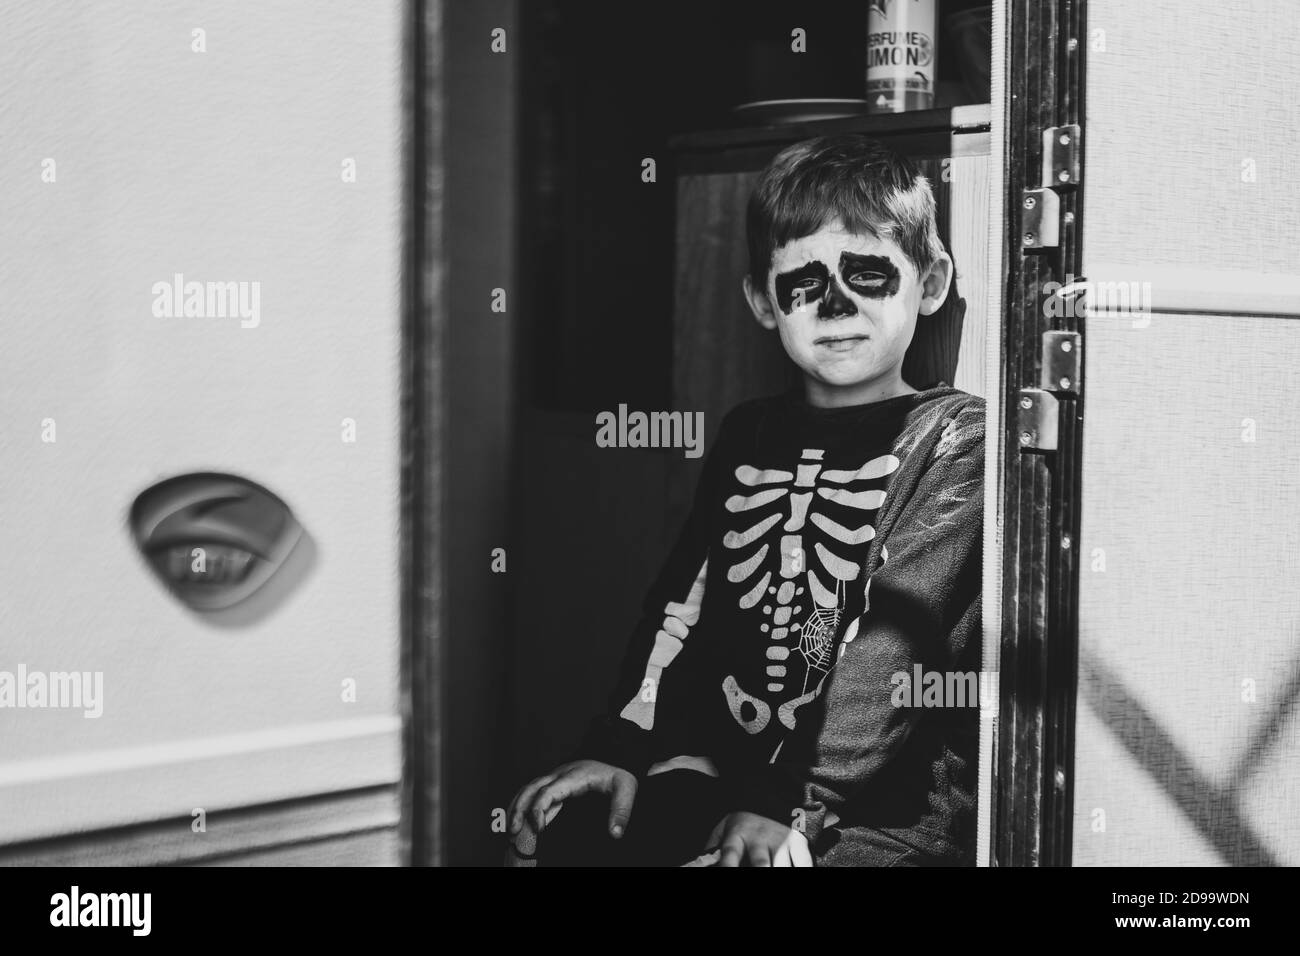 Grayscale shot of a cute little boy wearing a Halloween skeleton costume Stock Photo